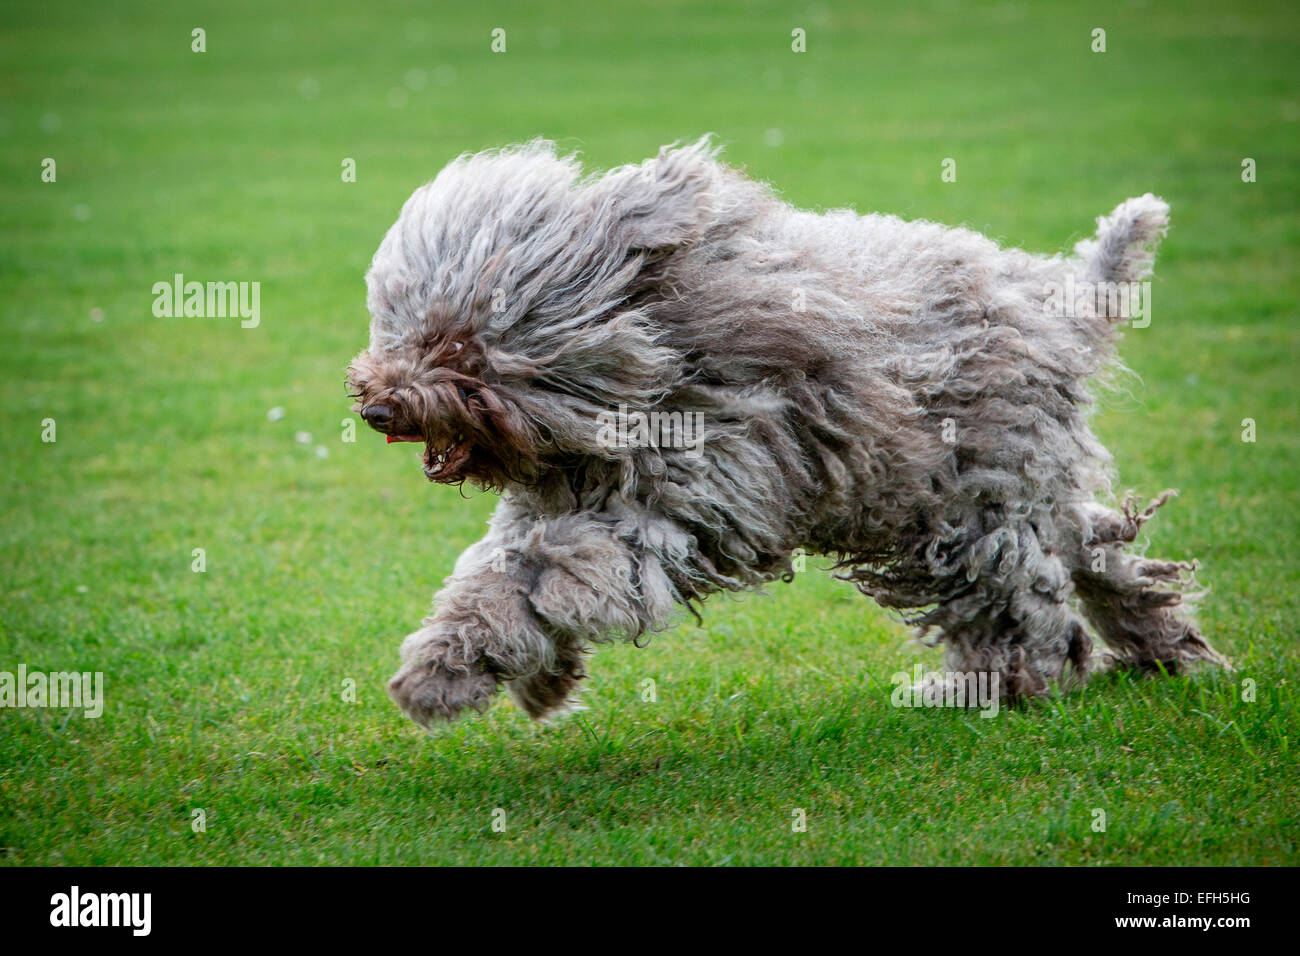 Long haired hungarian water dog (puli) running across grass Stock Photo